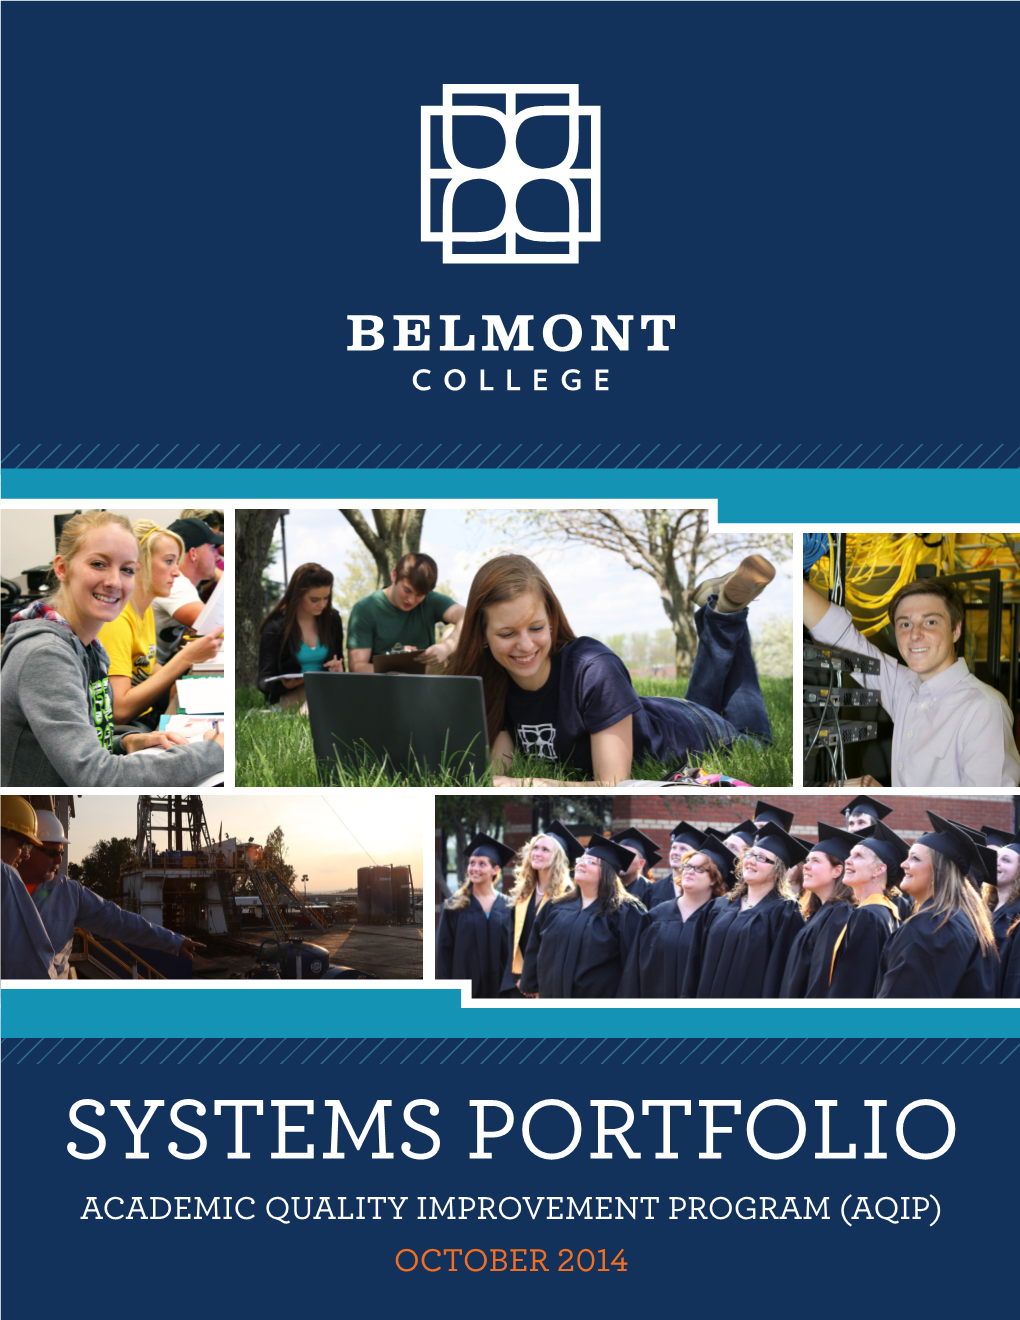 SYSTEMS PORTFOLIO ACADEMIC QUALITY IMPROVEMENT PROGRAM (AQIP) OCTOBER 2014 Belmont College October 2014